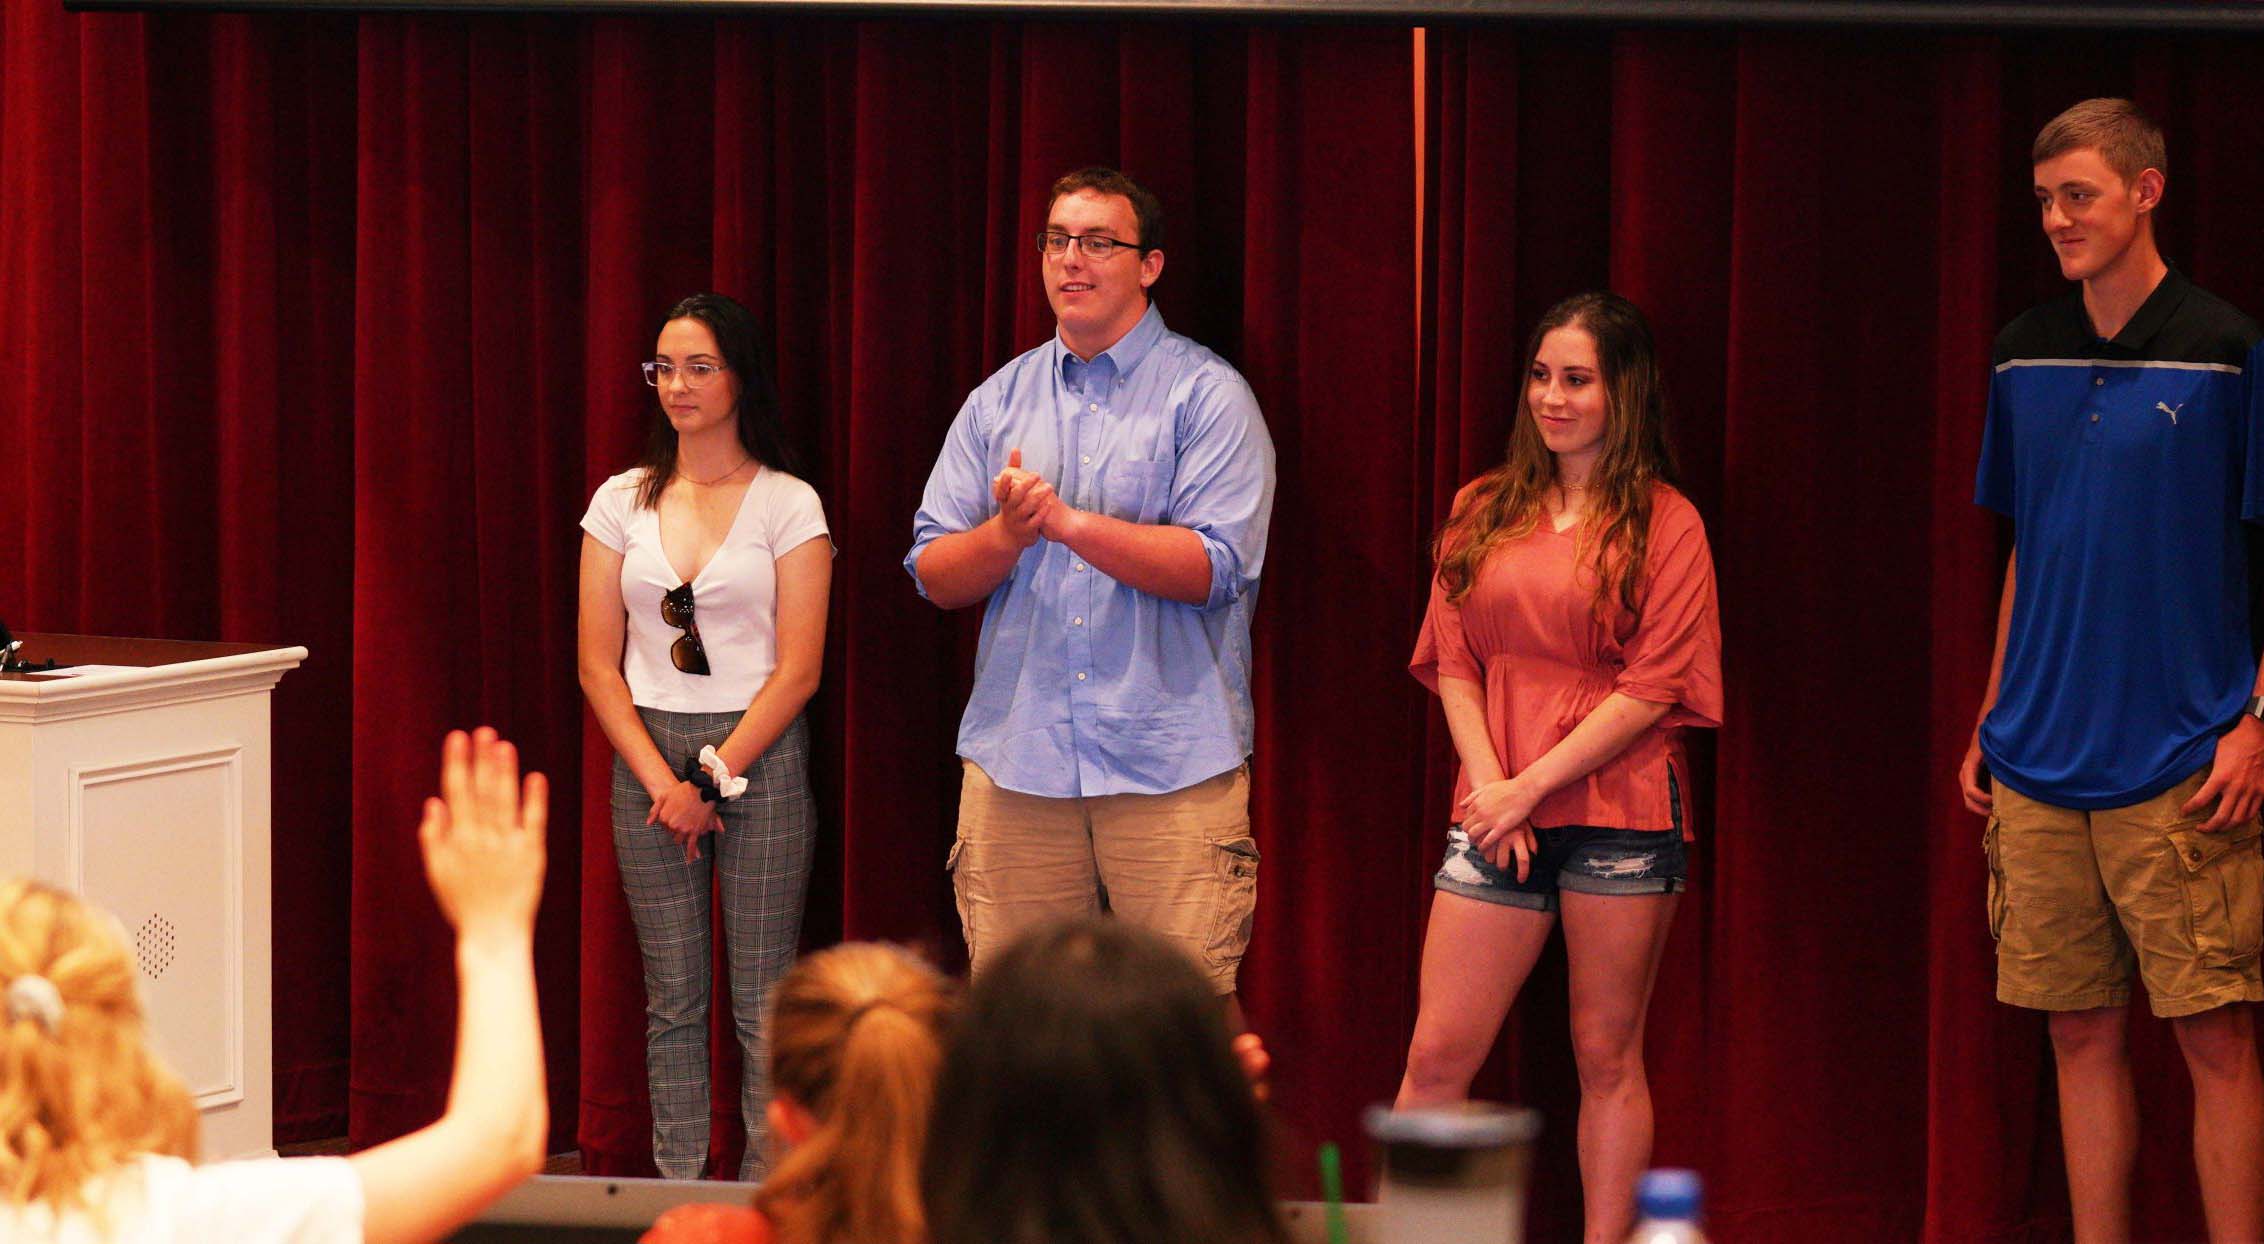 Student group makes presentation on last day of Summer Scholars program